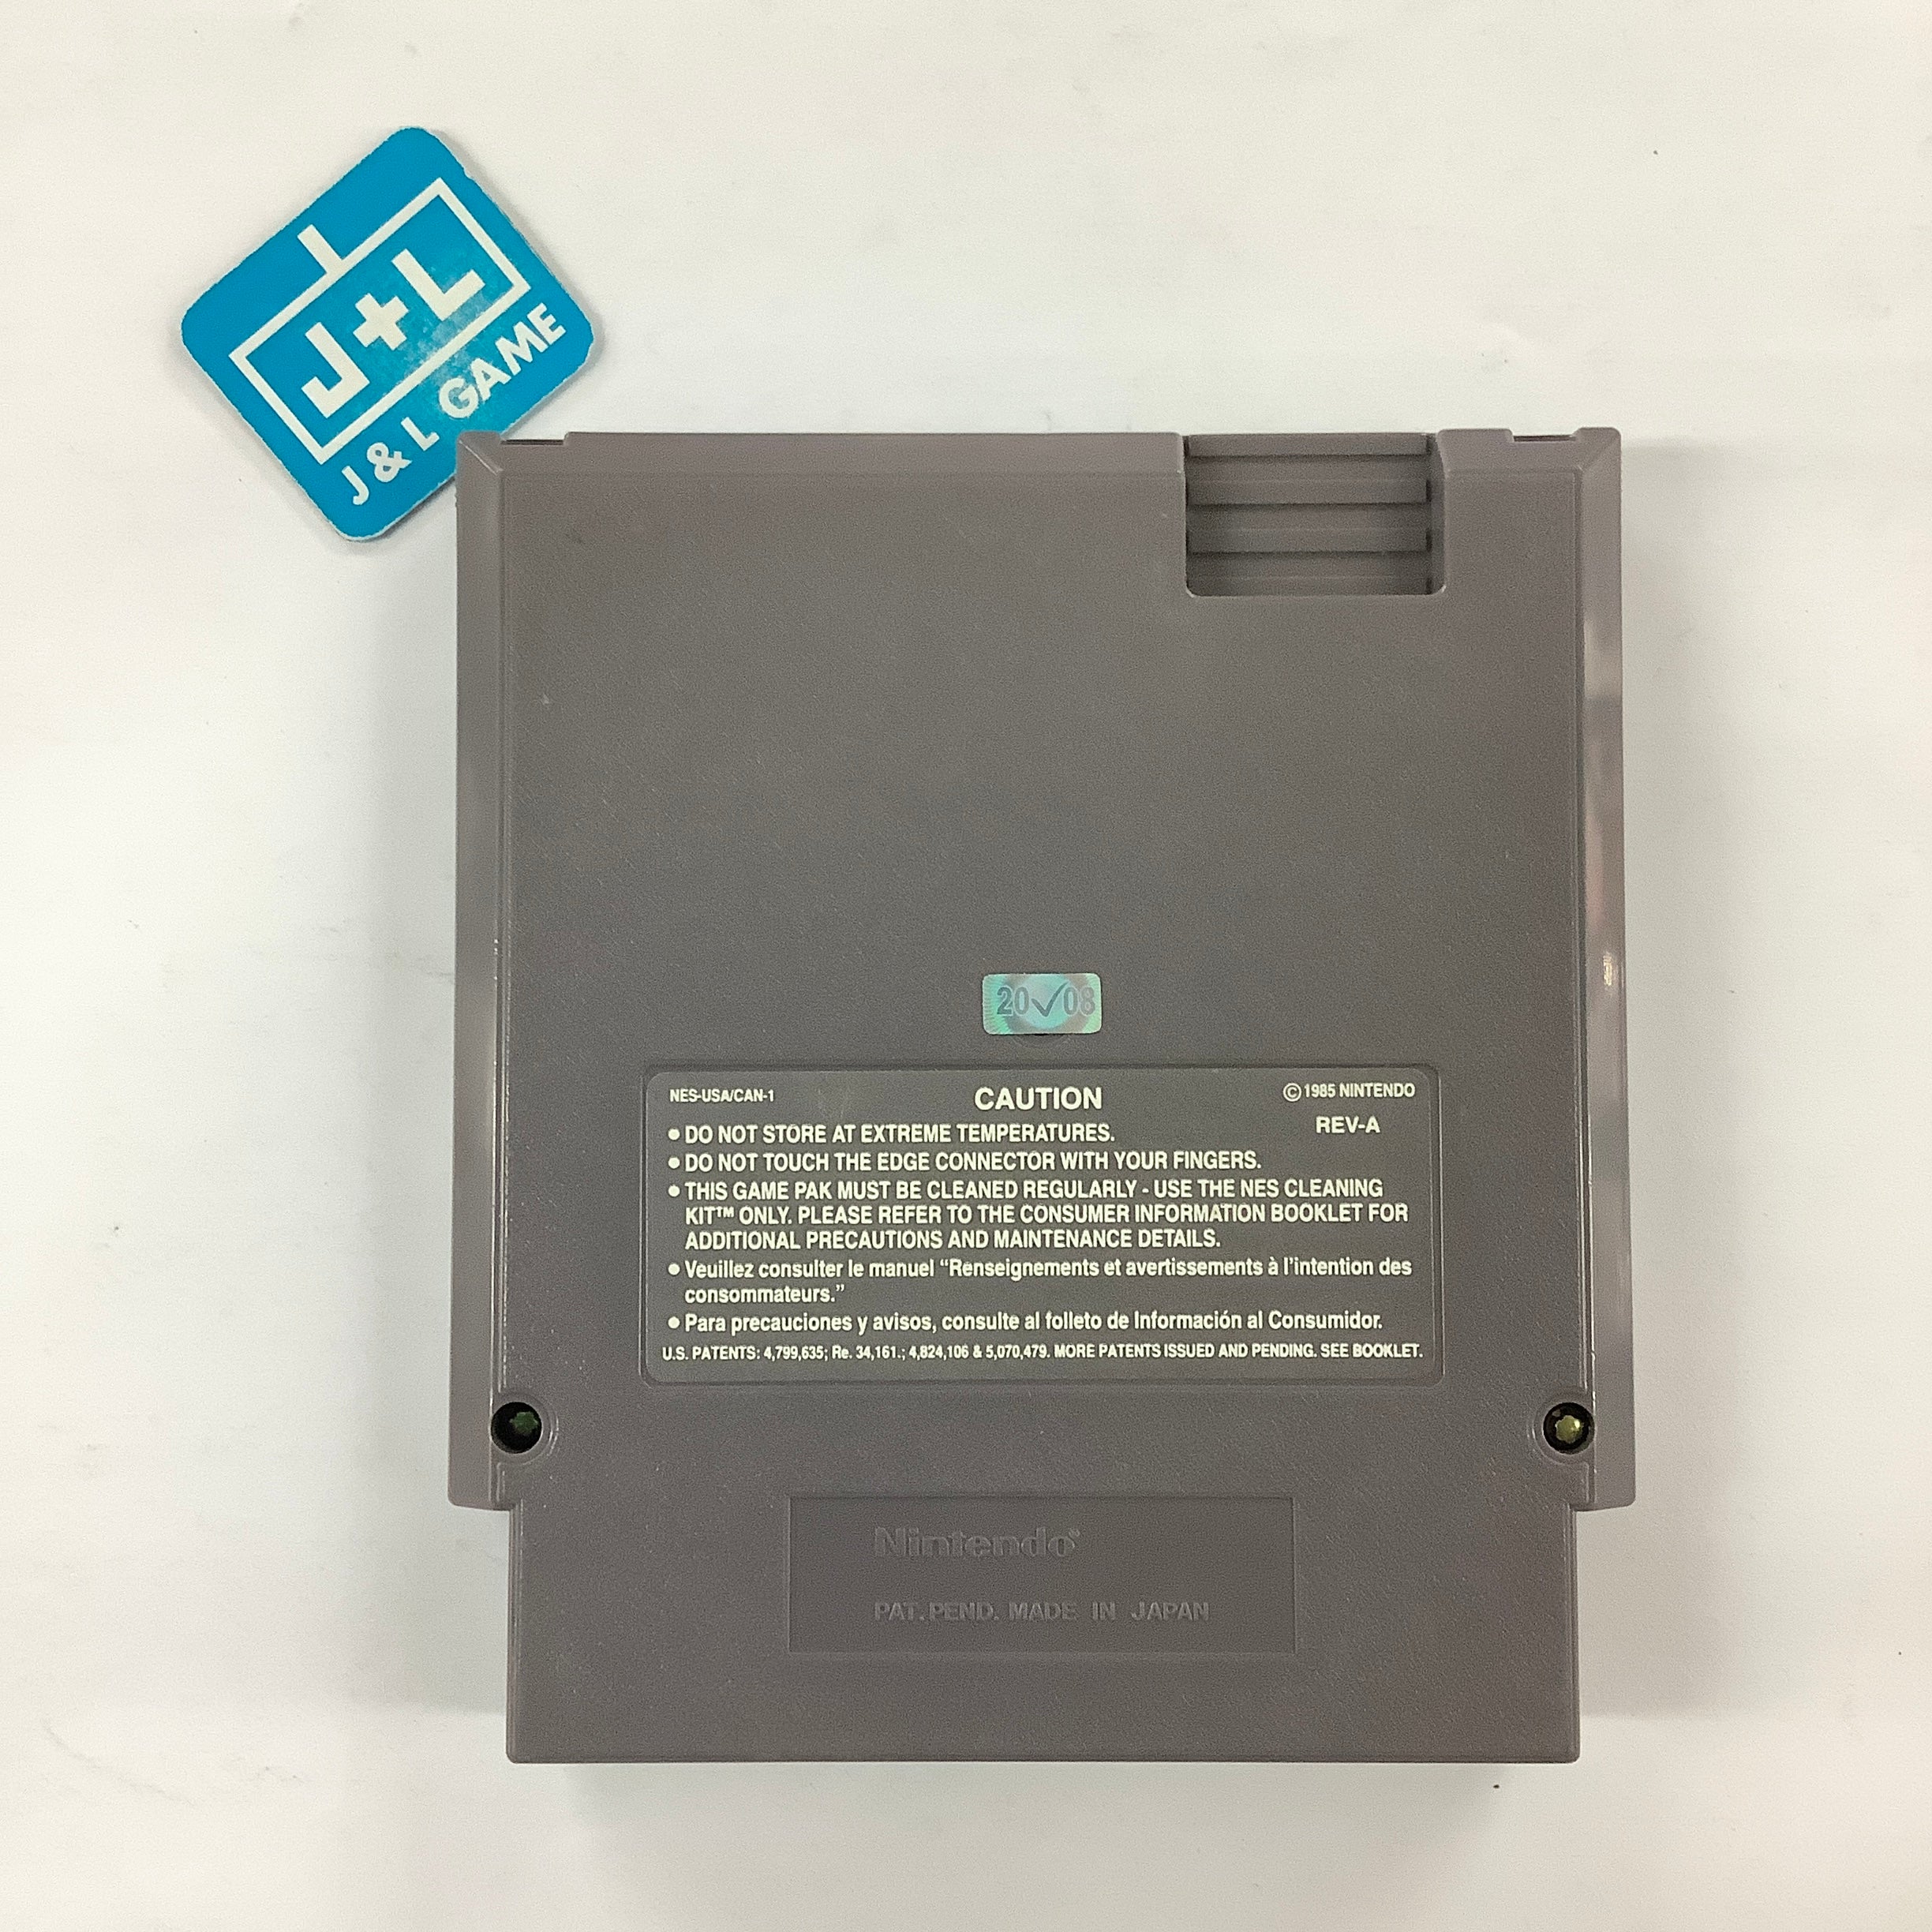 Mega Man 6 - (NES) Nintendo Entertainment System  [Pre-Owned] Video Games Nintendo   